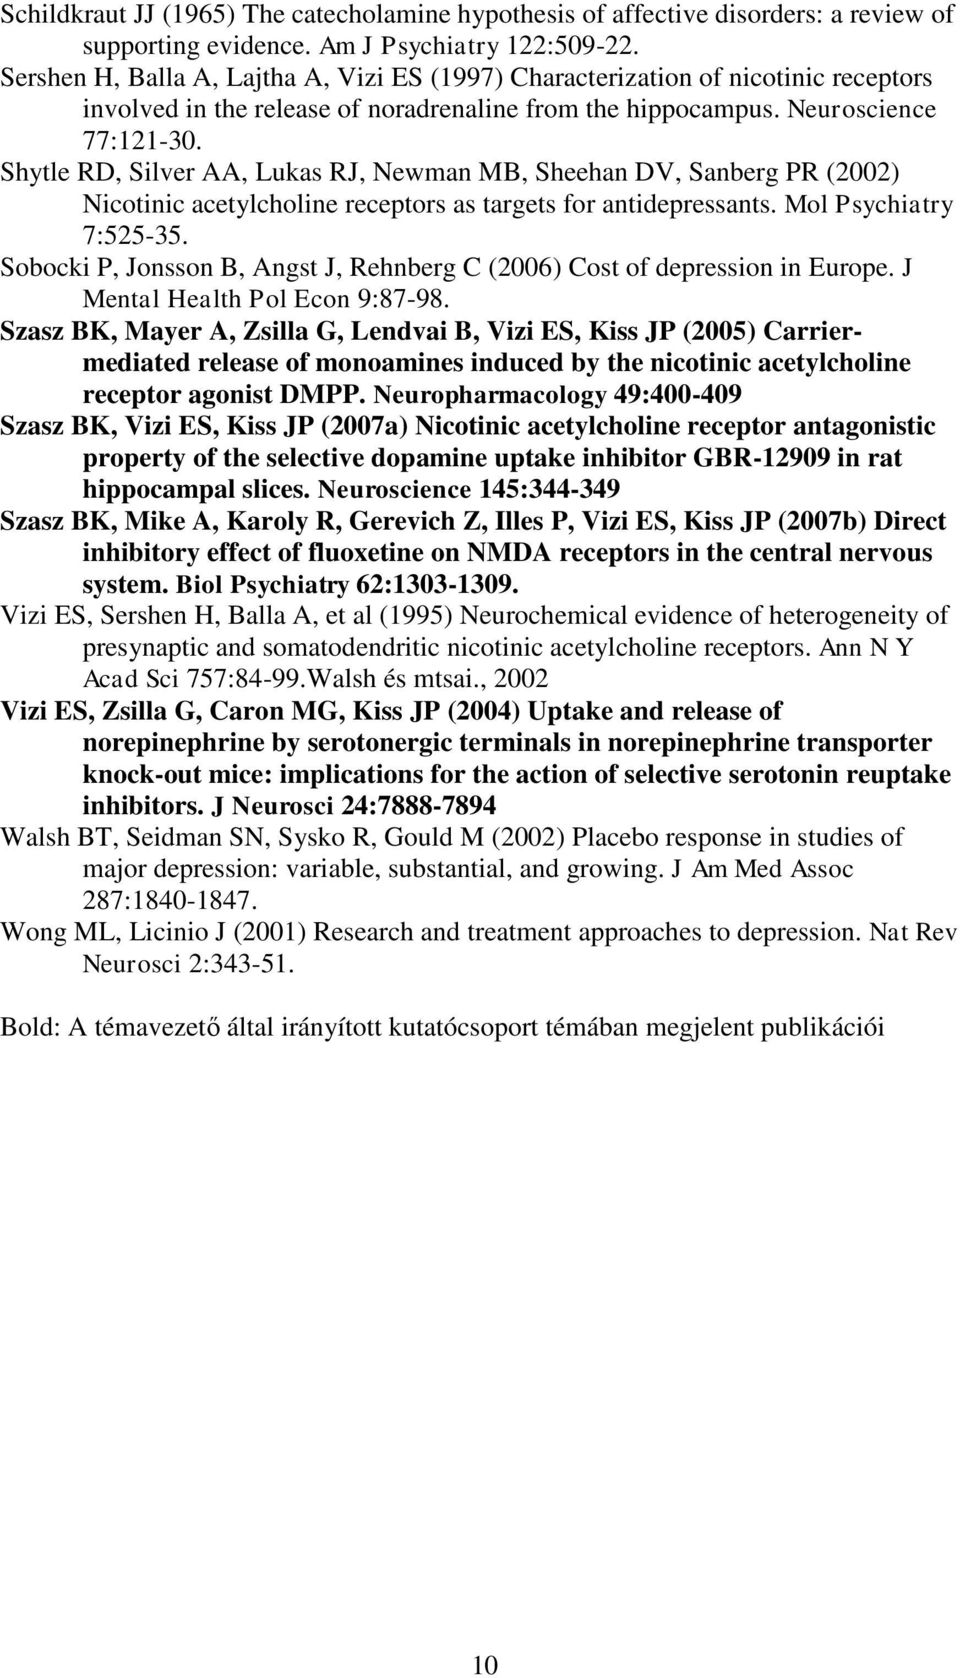 Shytle RD, Silver AA, Lukas RJ, Newman MB, Sheehan DV, Sanberg PR (2002) Nicotinic acetylcholine receptors as targets for antidepressants. Mol Psychiatry 7:525-35.